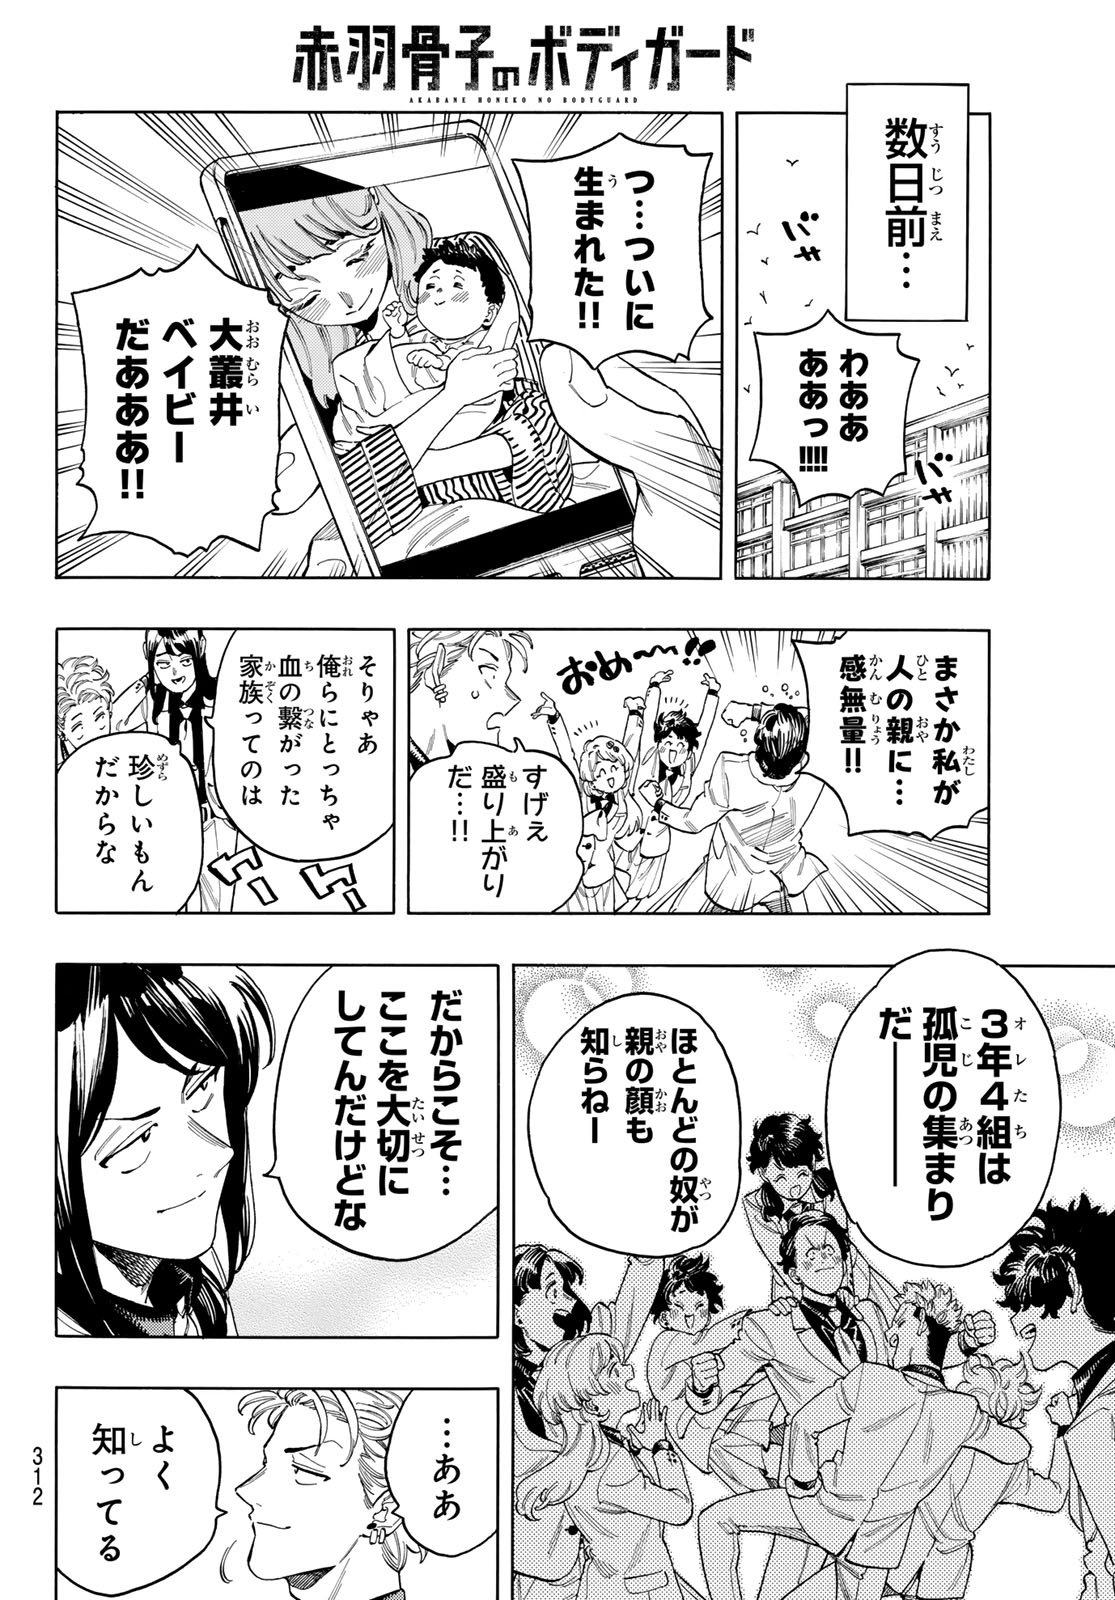 Akabane Honeko no Bodyguard - Chapter 84 - Page 6